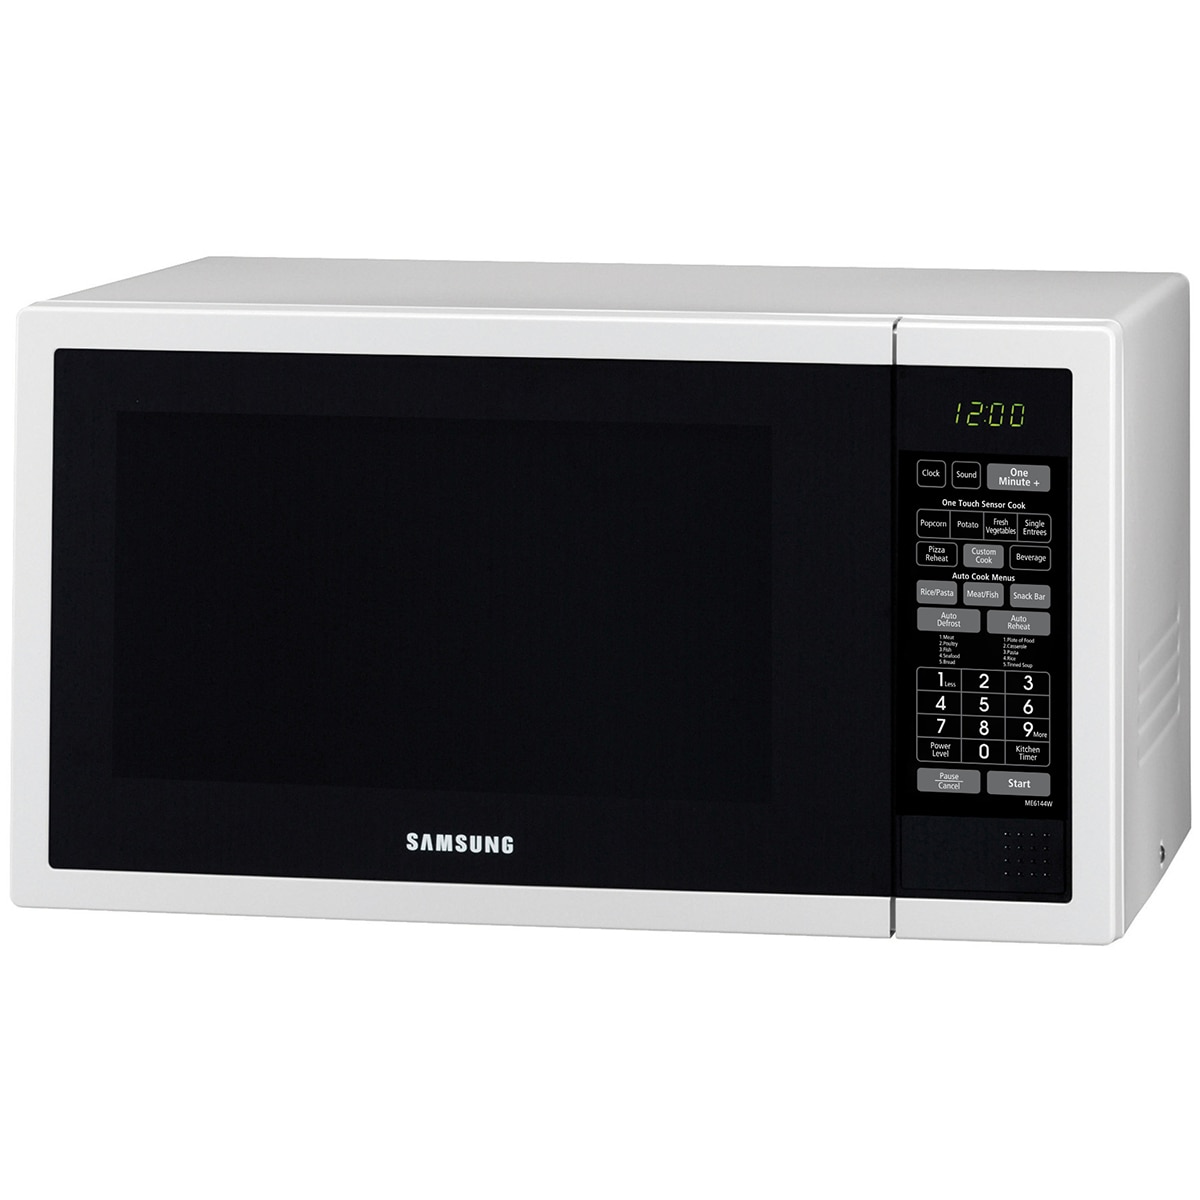 SAMSUNG Microwave